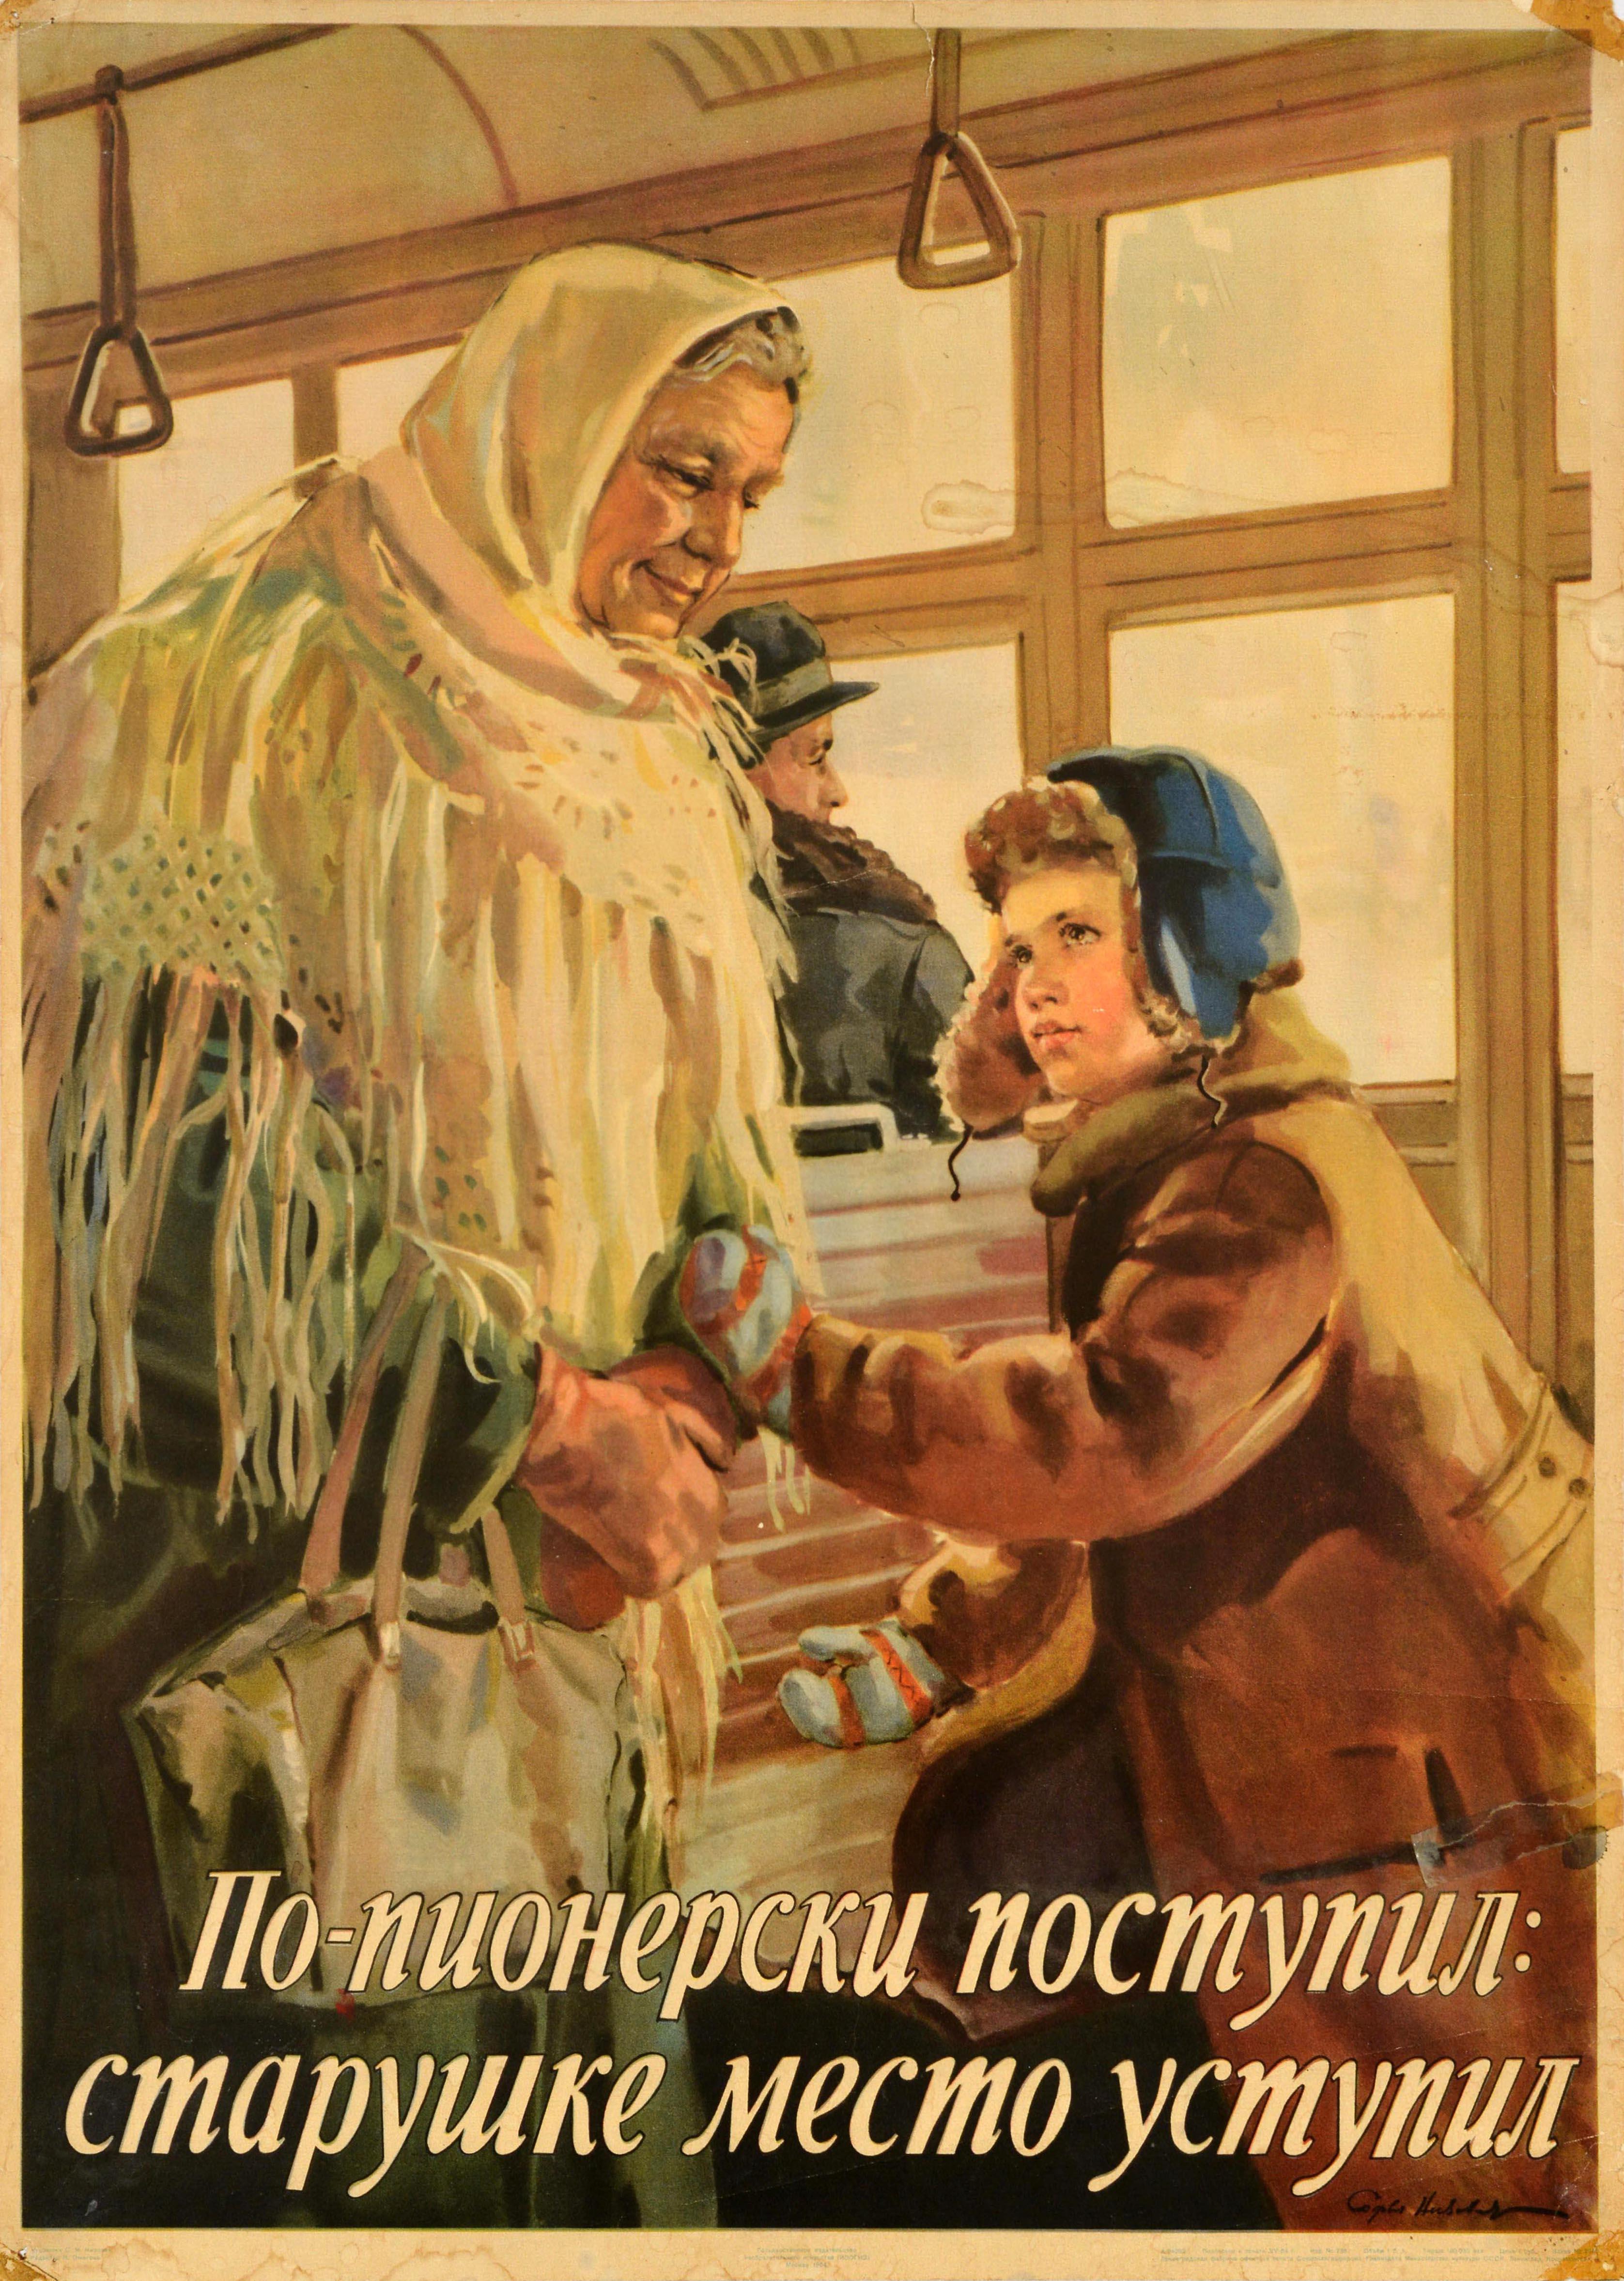 S Nizovaya Print - Original Vintage Soviet Poster Pioneer Polite Conduct Respect To Elders USSR Art